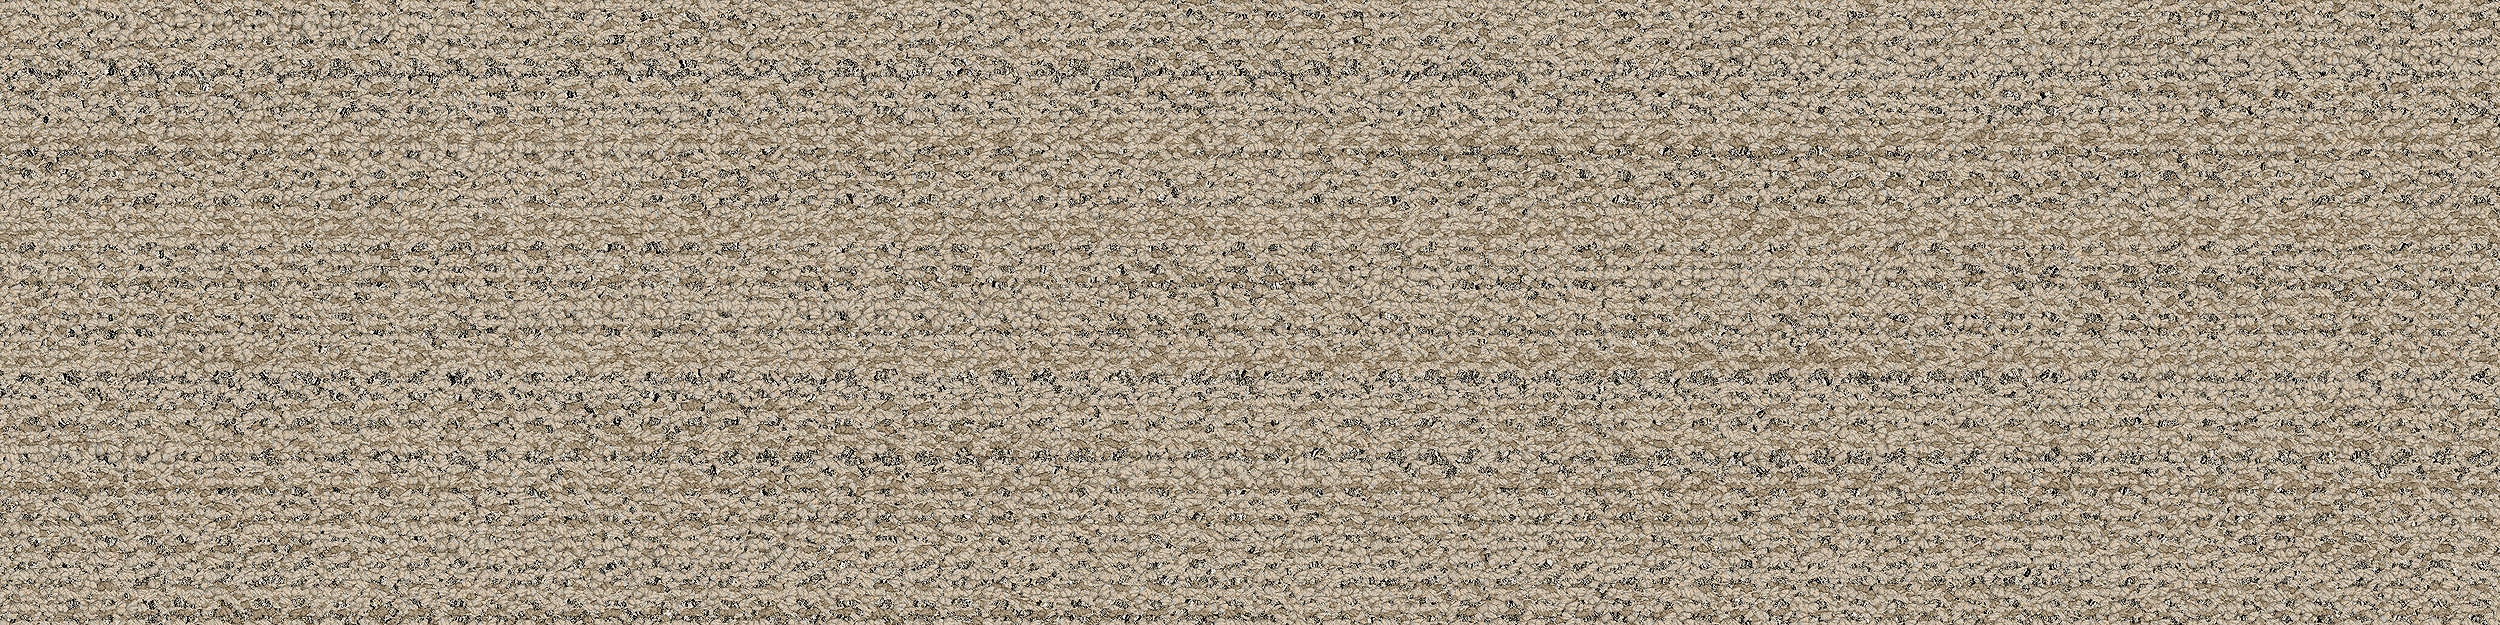 WW870 Carpet Tile In Raffia Weft número de imagen 9